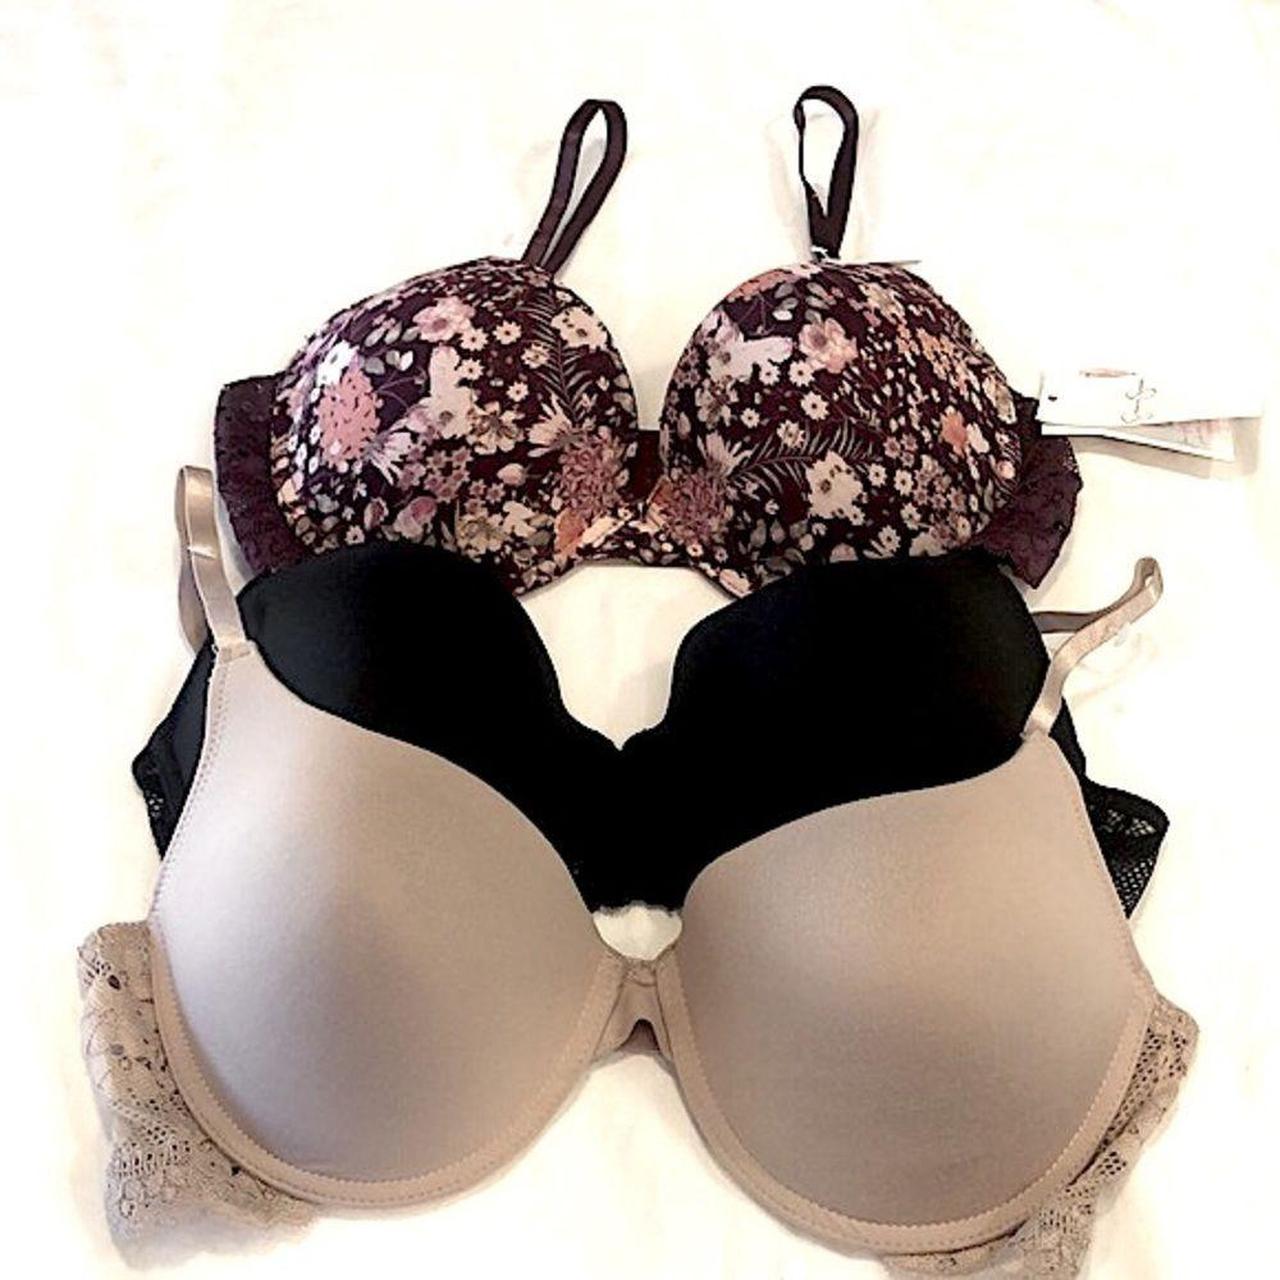 Jessica Simpson bra set tan, black floral 3 pack set